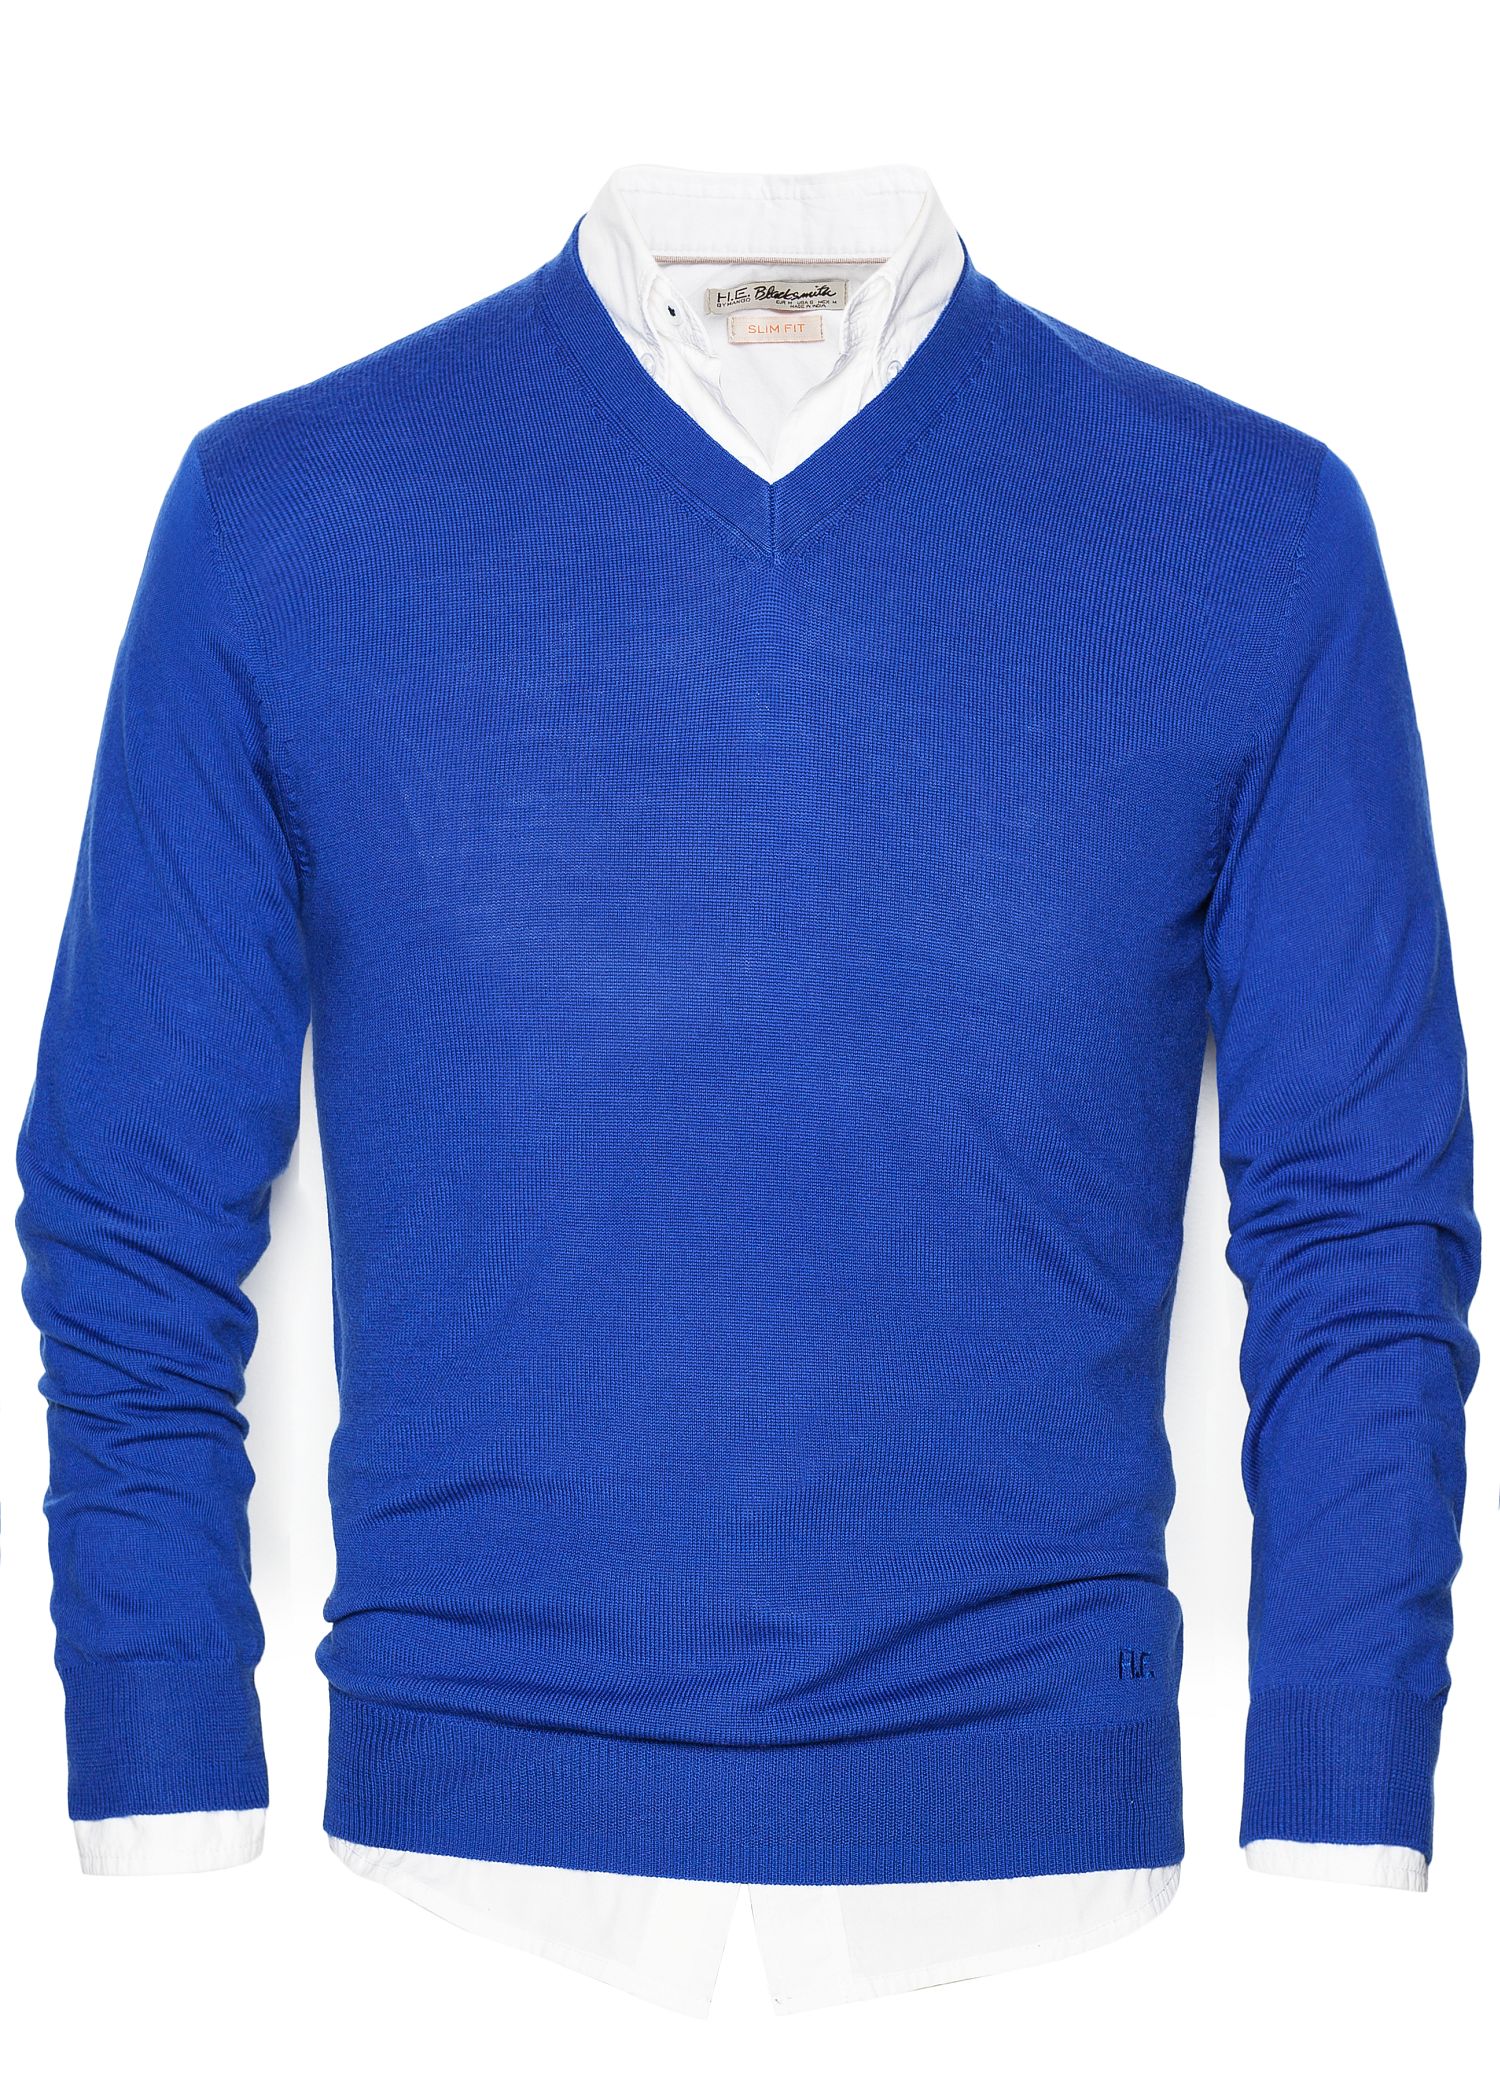 Lyst - Mango V-neck Wool Sweater in Blue for Men